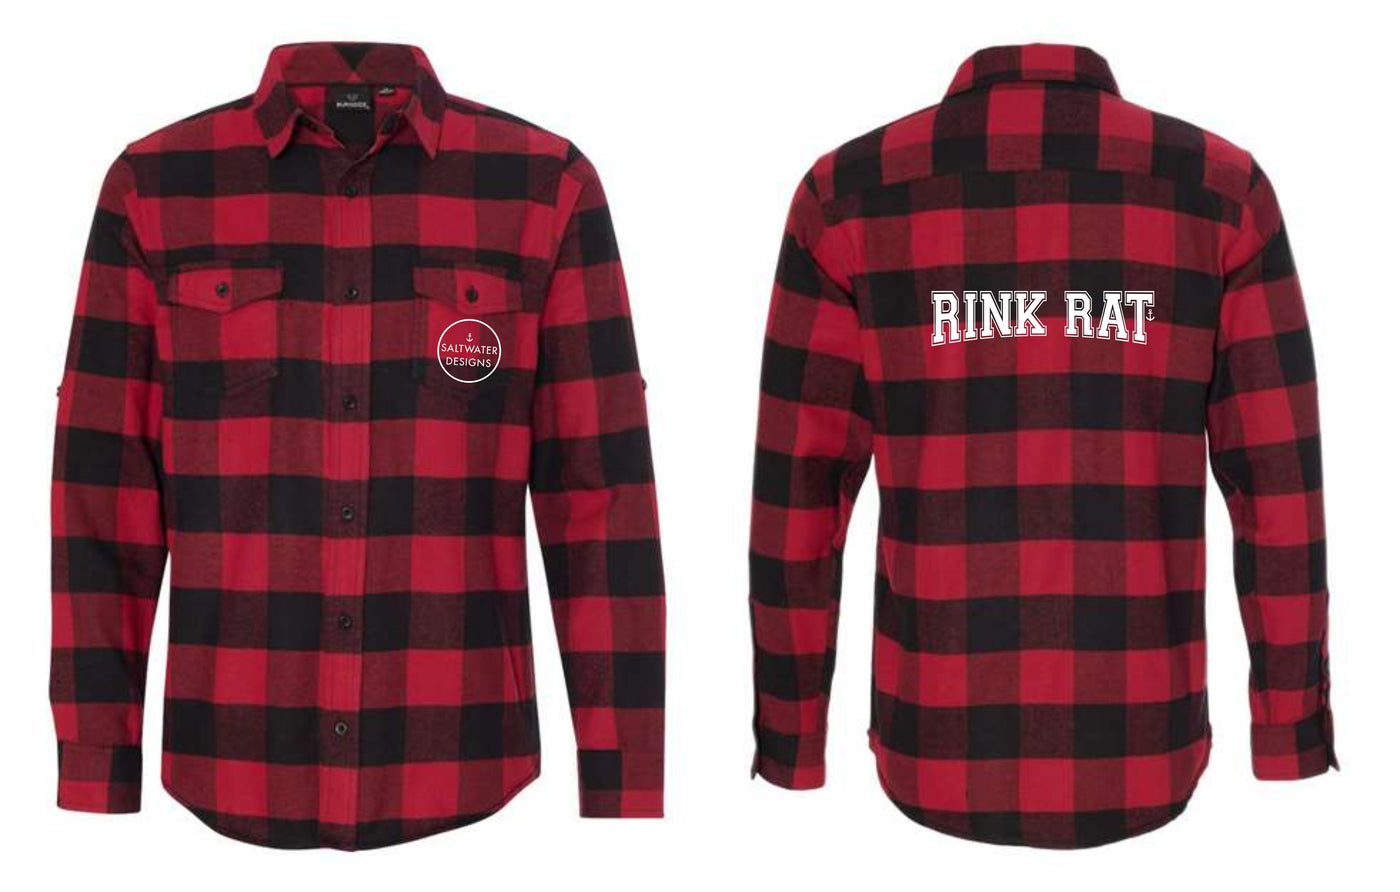 "Rink Rat" Unisex Plaid Flannel Shirt